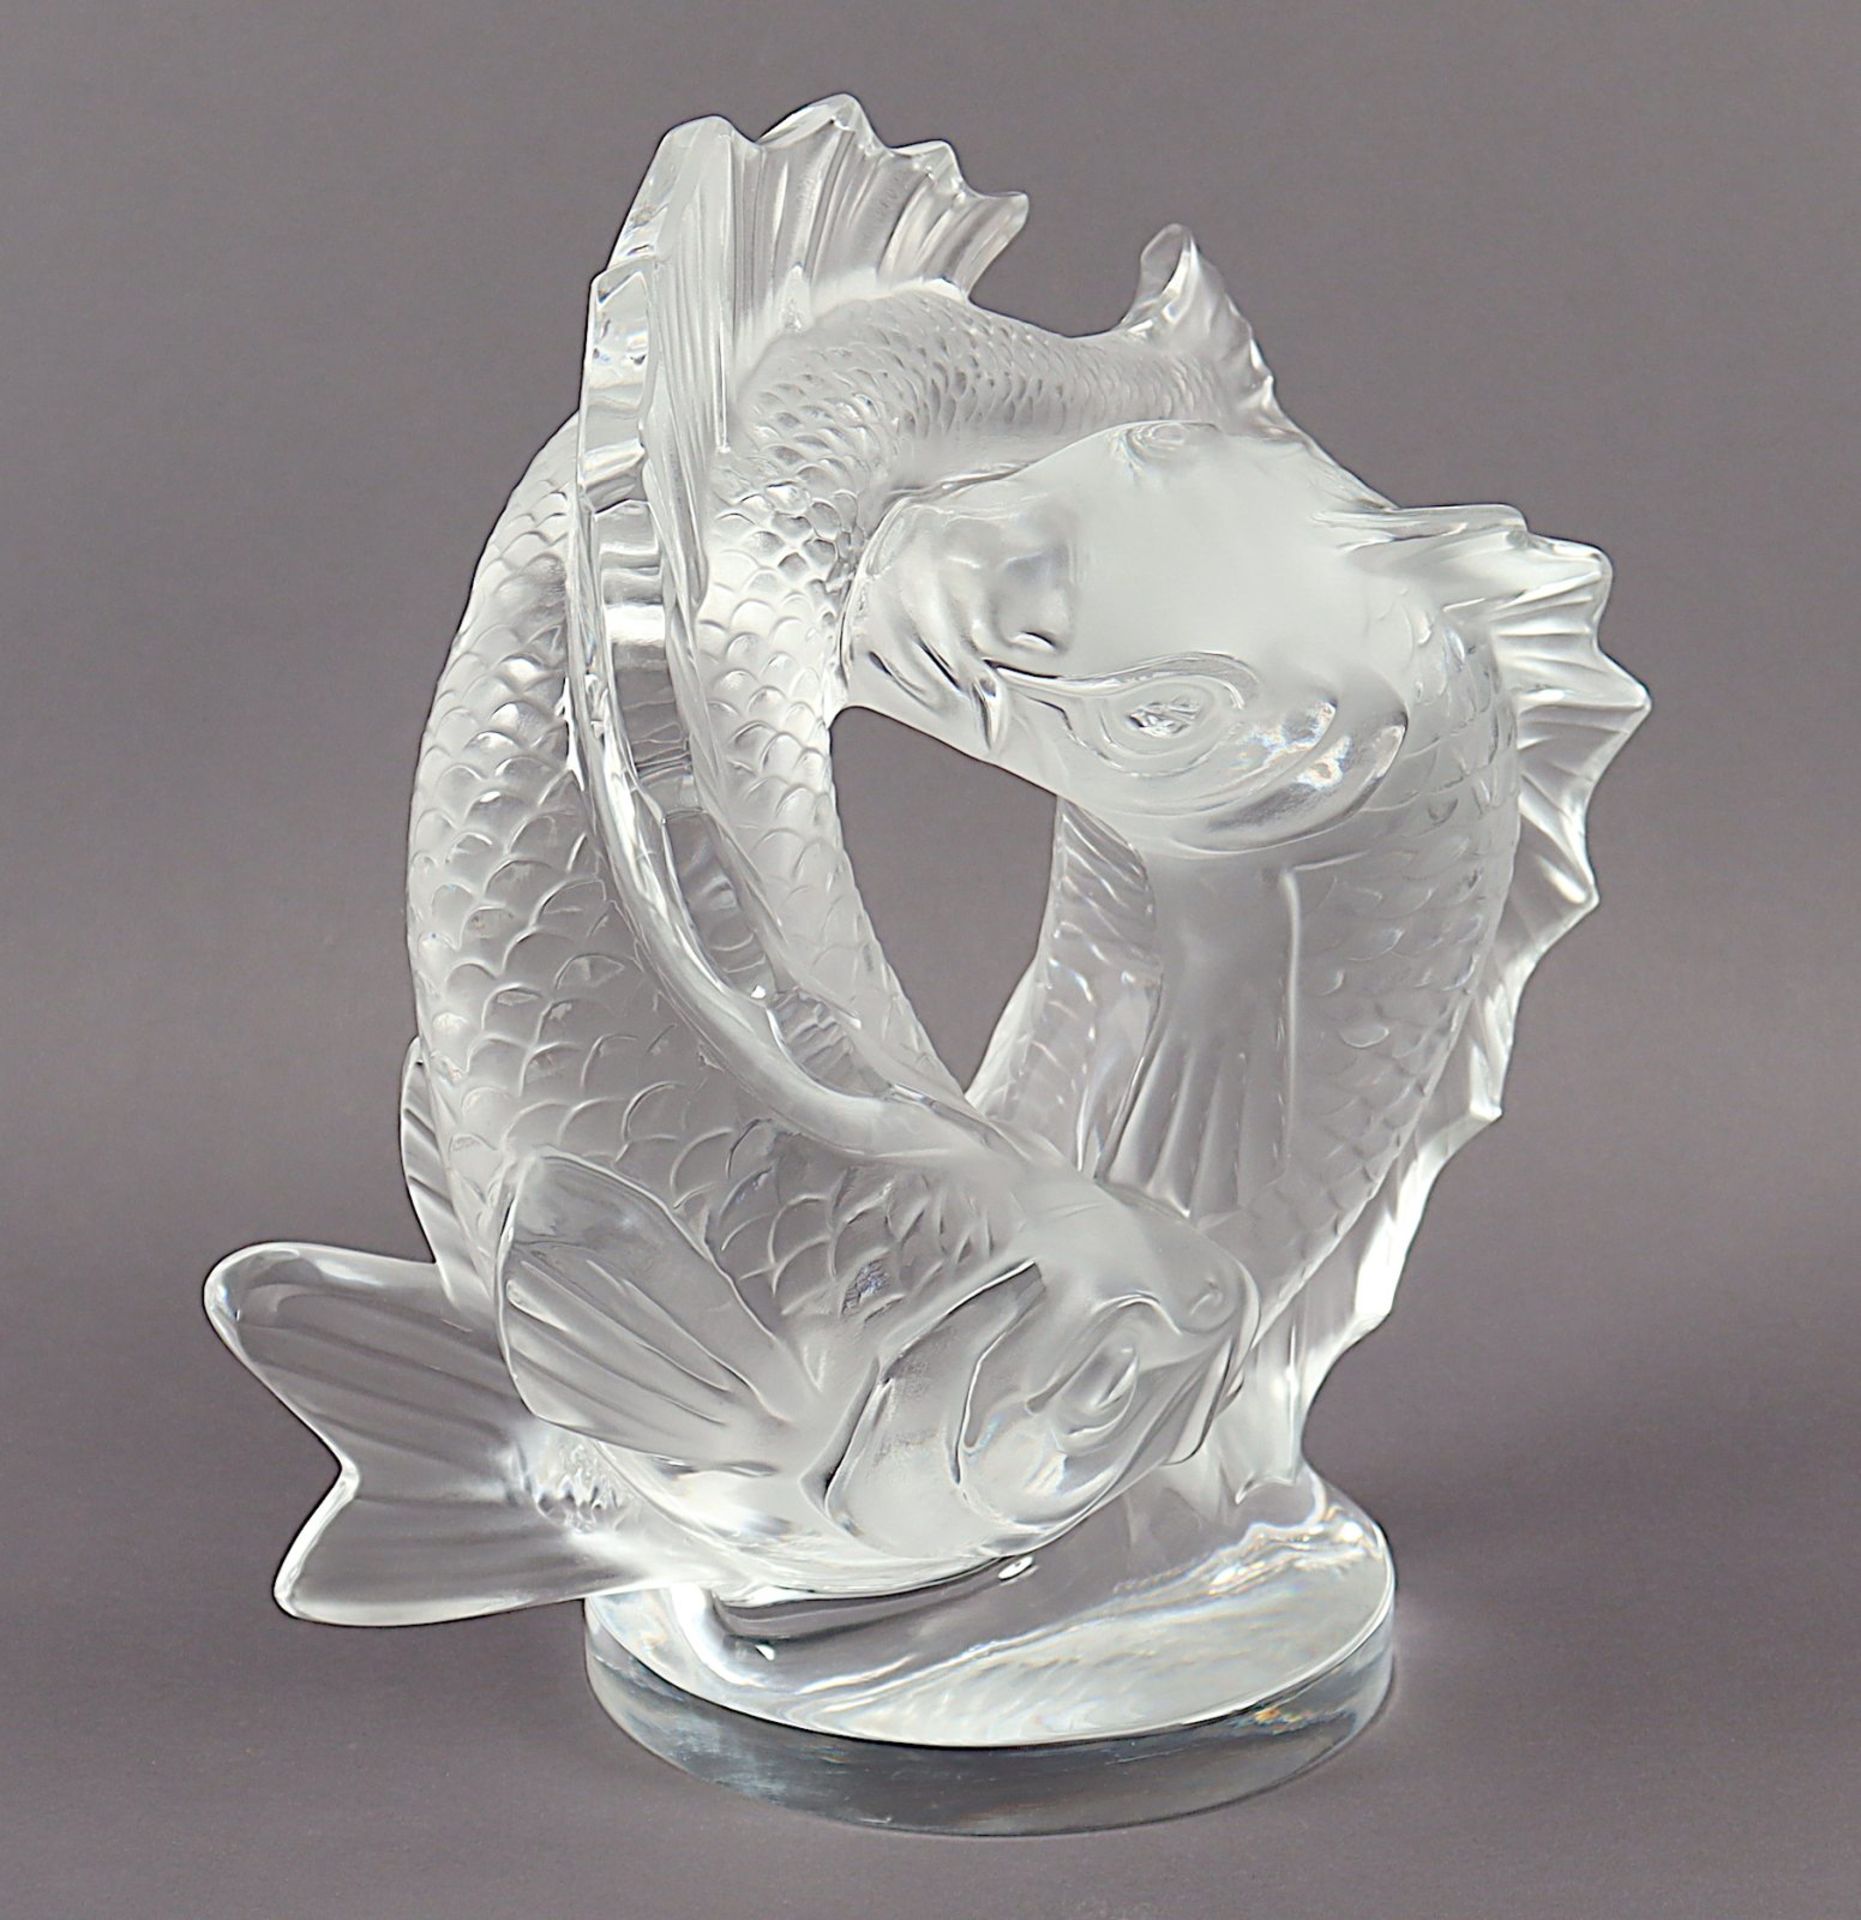 Fische, Lalique - Image 2 of 4